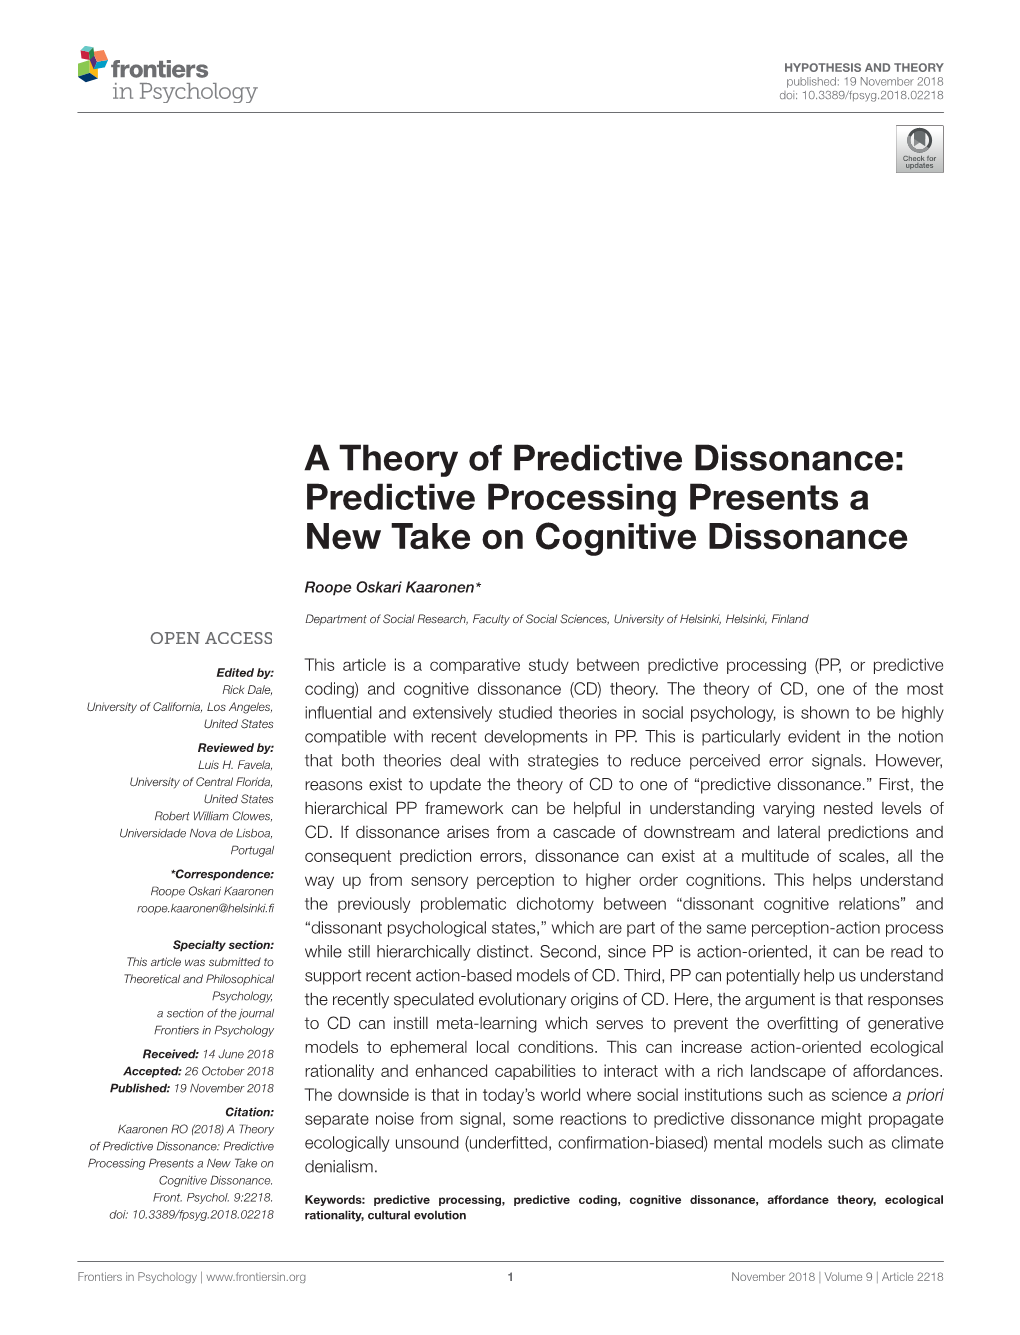 A Theory of Predictive Dissonance: Predictive Processing Presents a New Take on Cognitive Dissonance